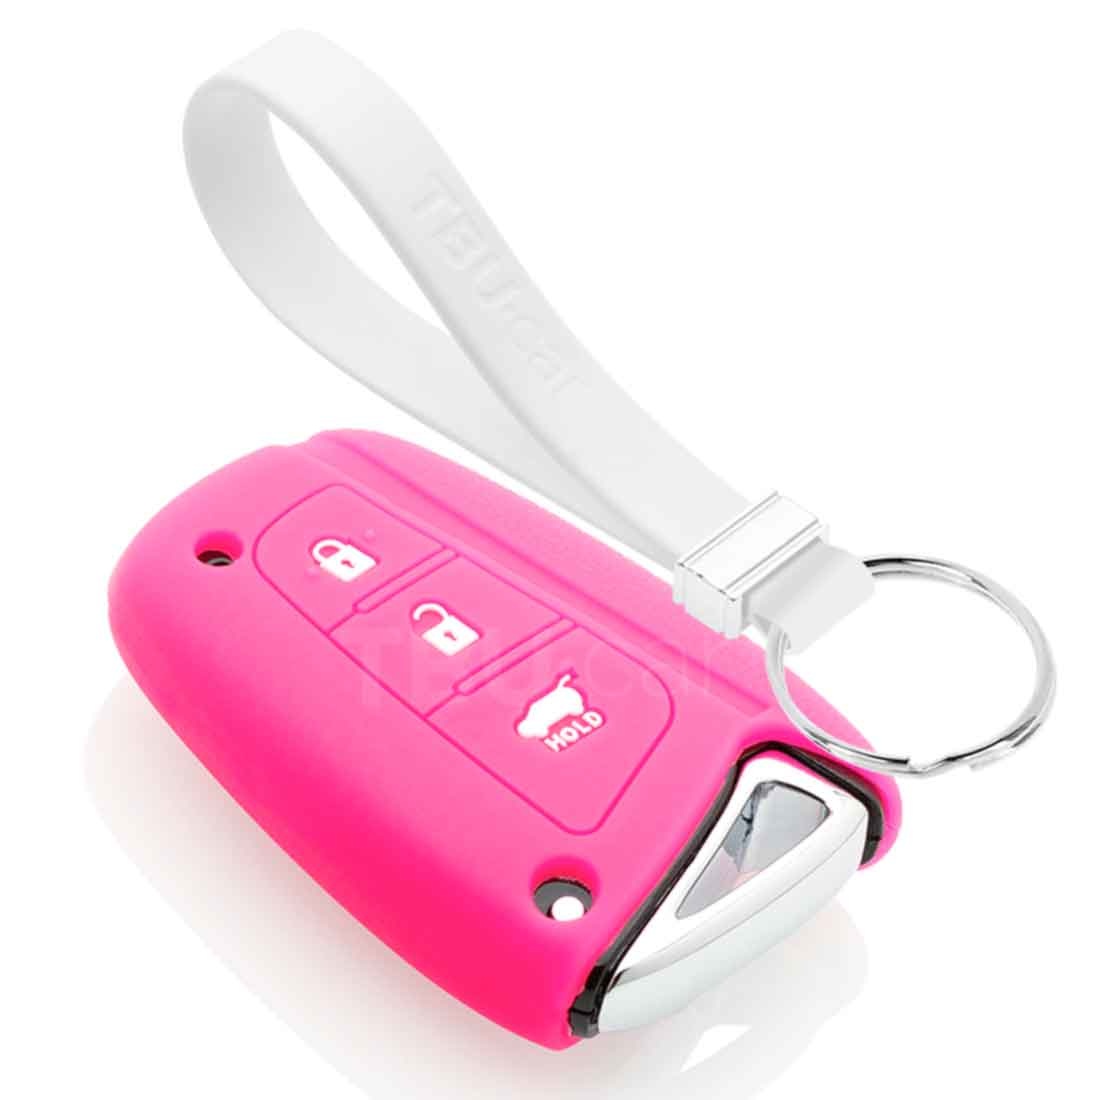 TBU car TBU car Car key cover compatible with Hyundai - Silicone Protective Remote Key Shell - FOB Case Cover - Fluor Pink